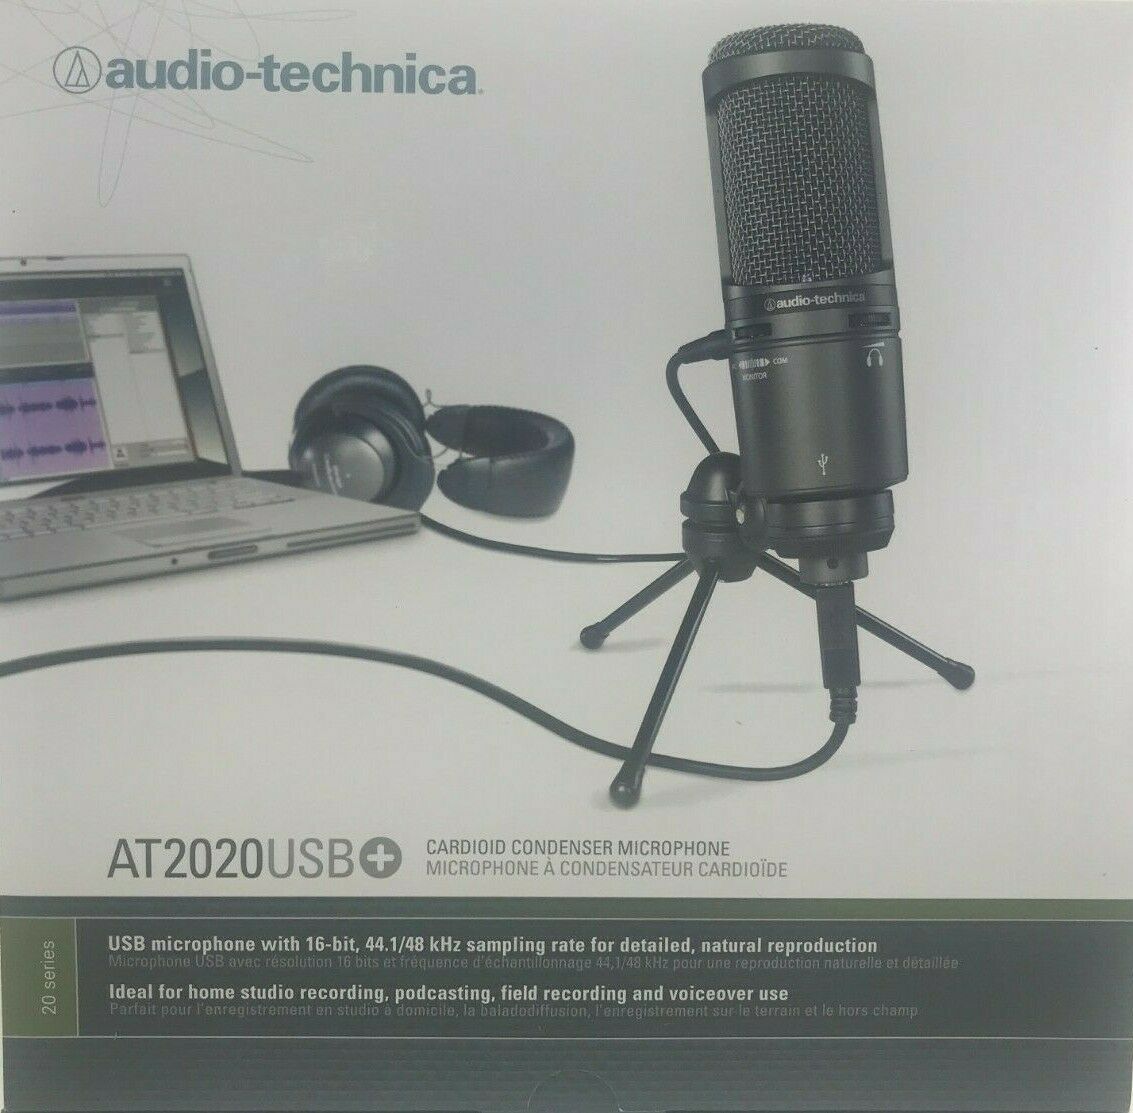 Audio-Technica - AT2020USB+  - Cardioid Condenser Studio USB Microphone - $149.95